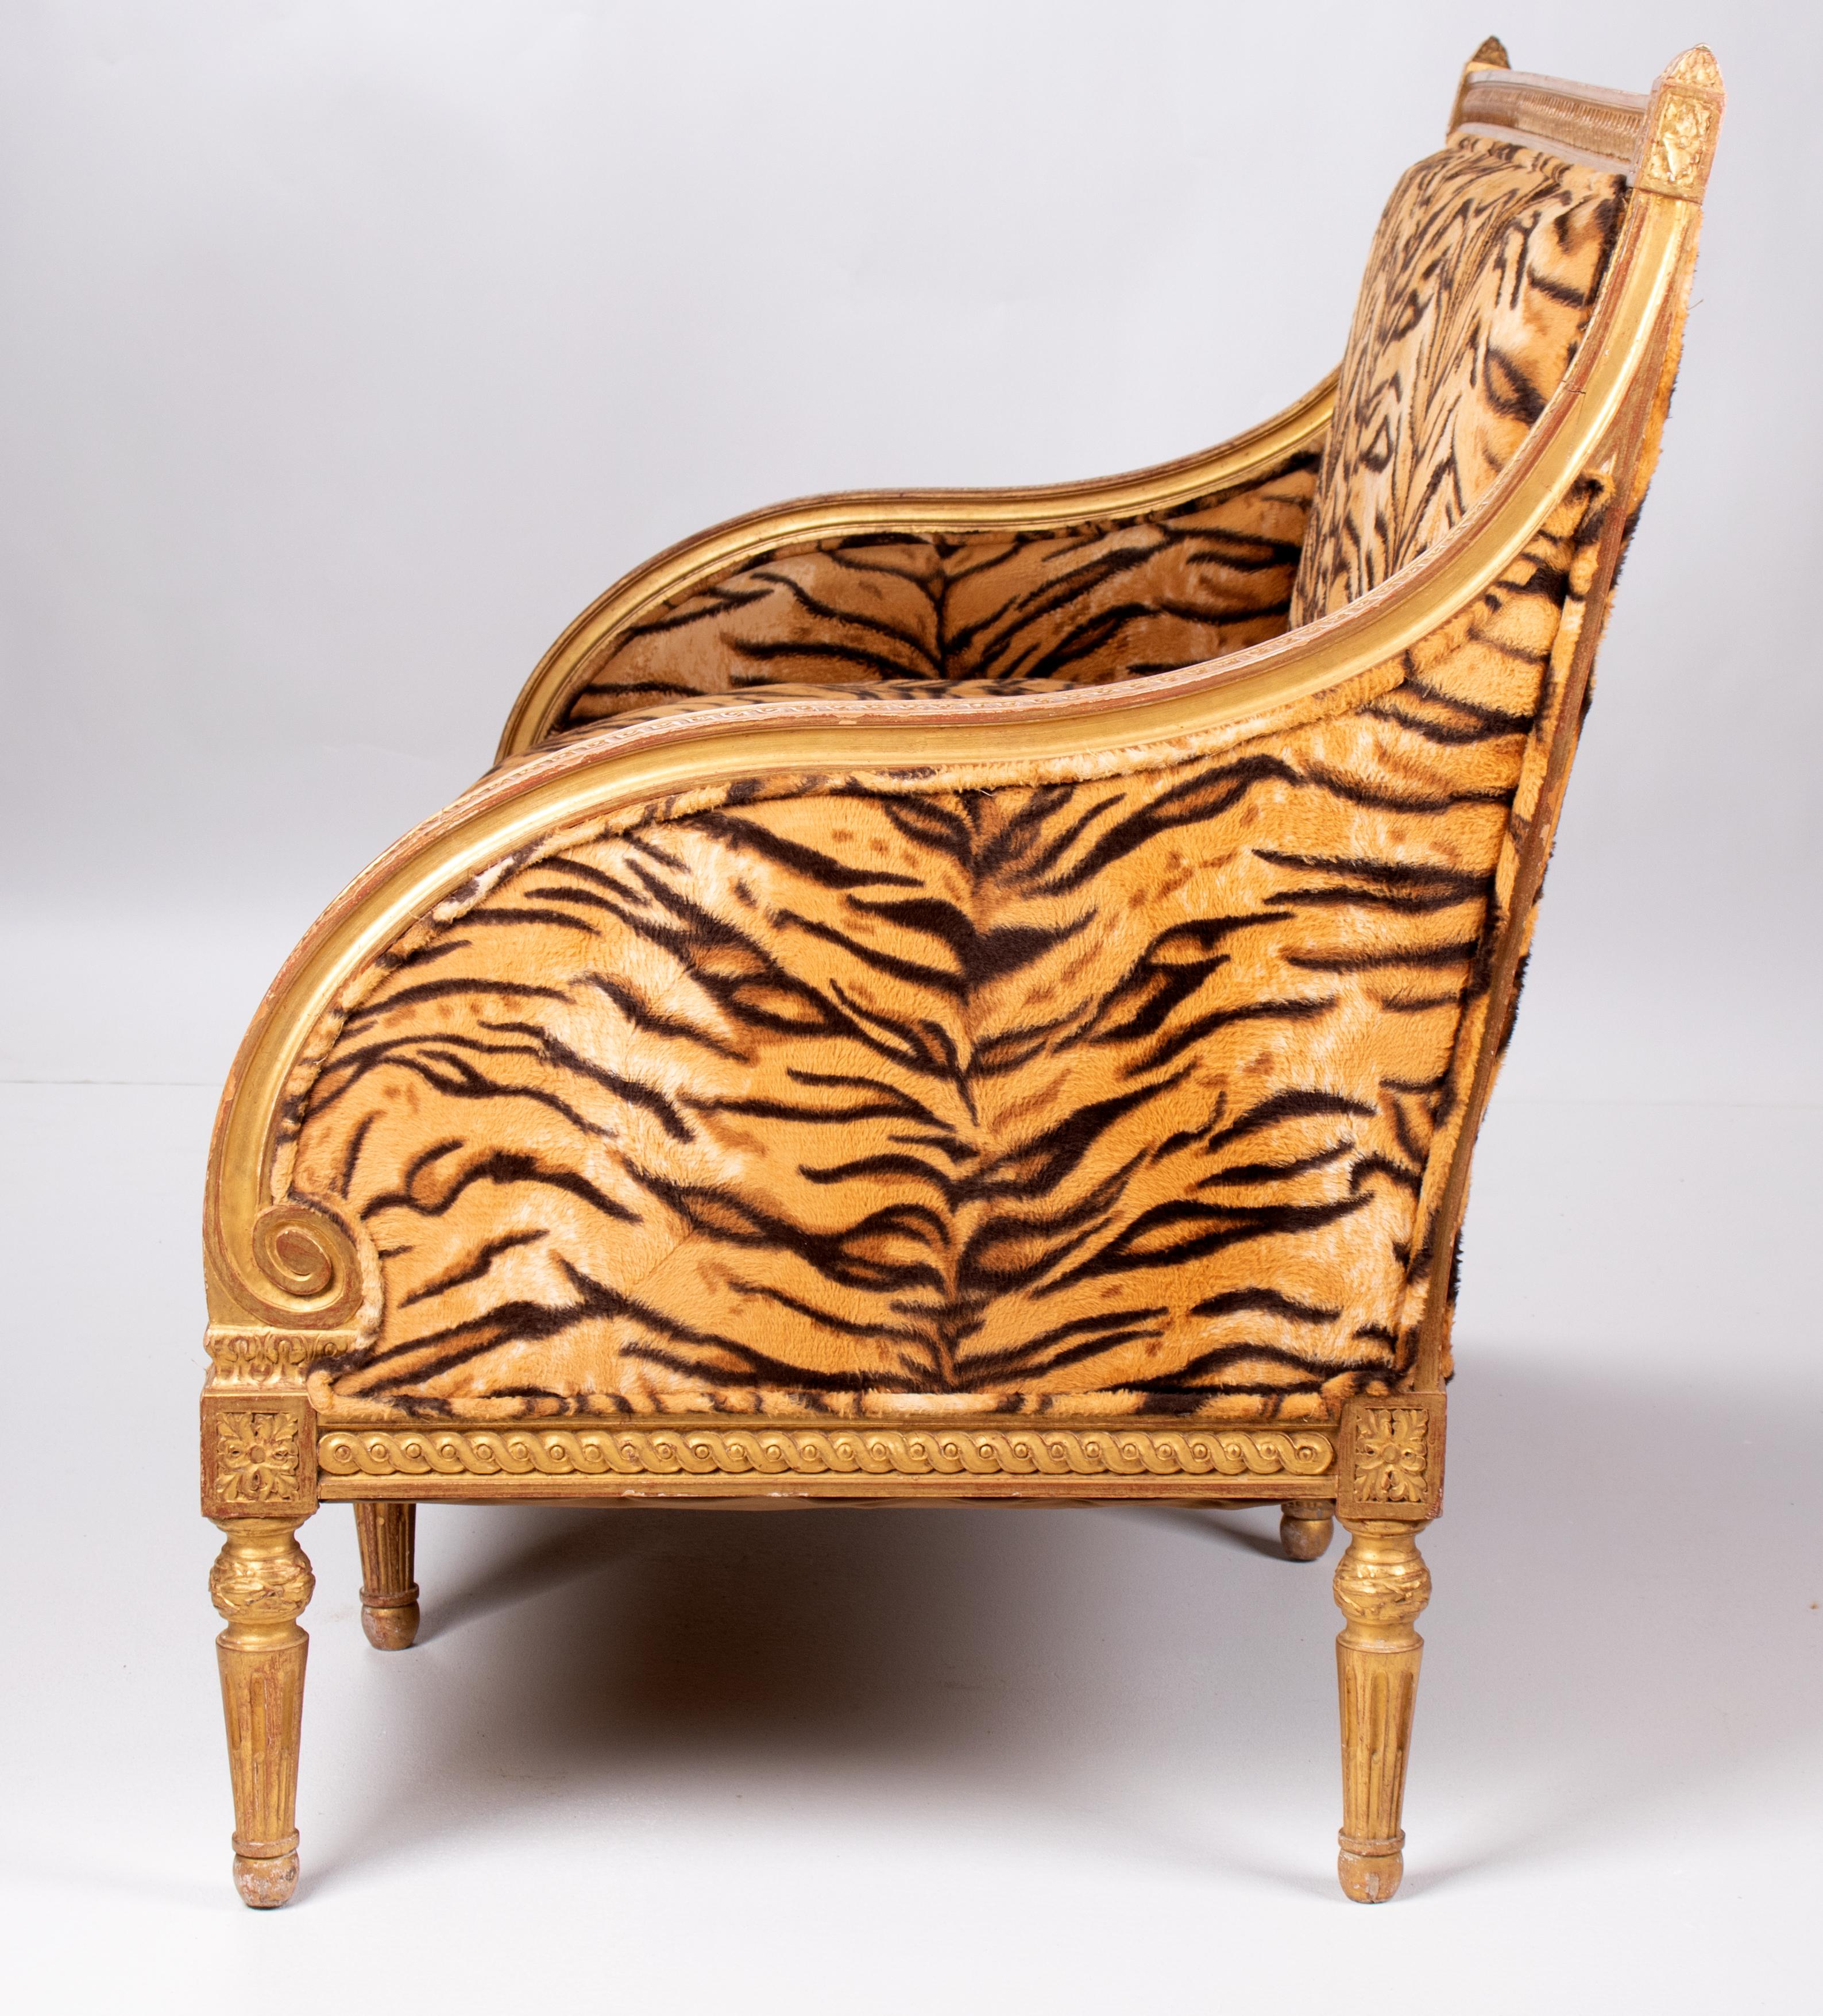 1750 pair of French Charles IV gold gilded upholstered sofas.